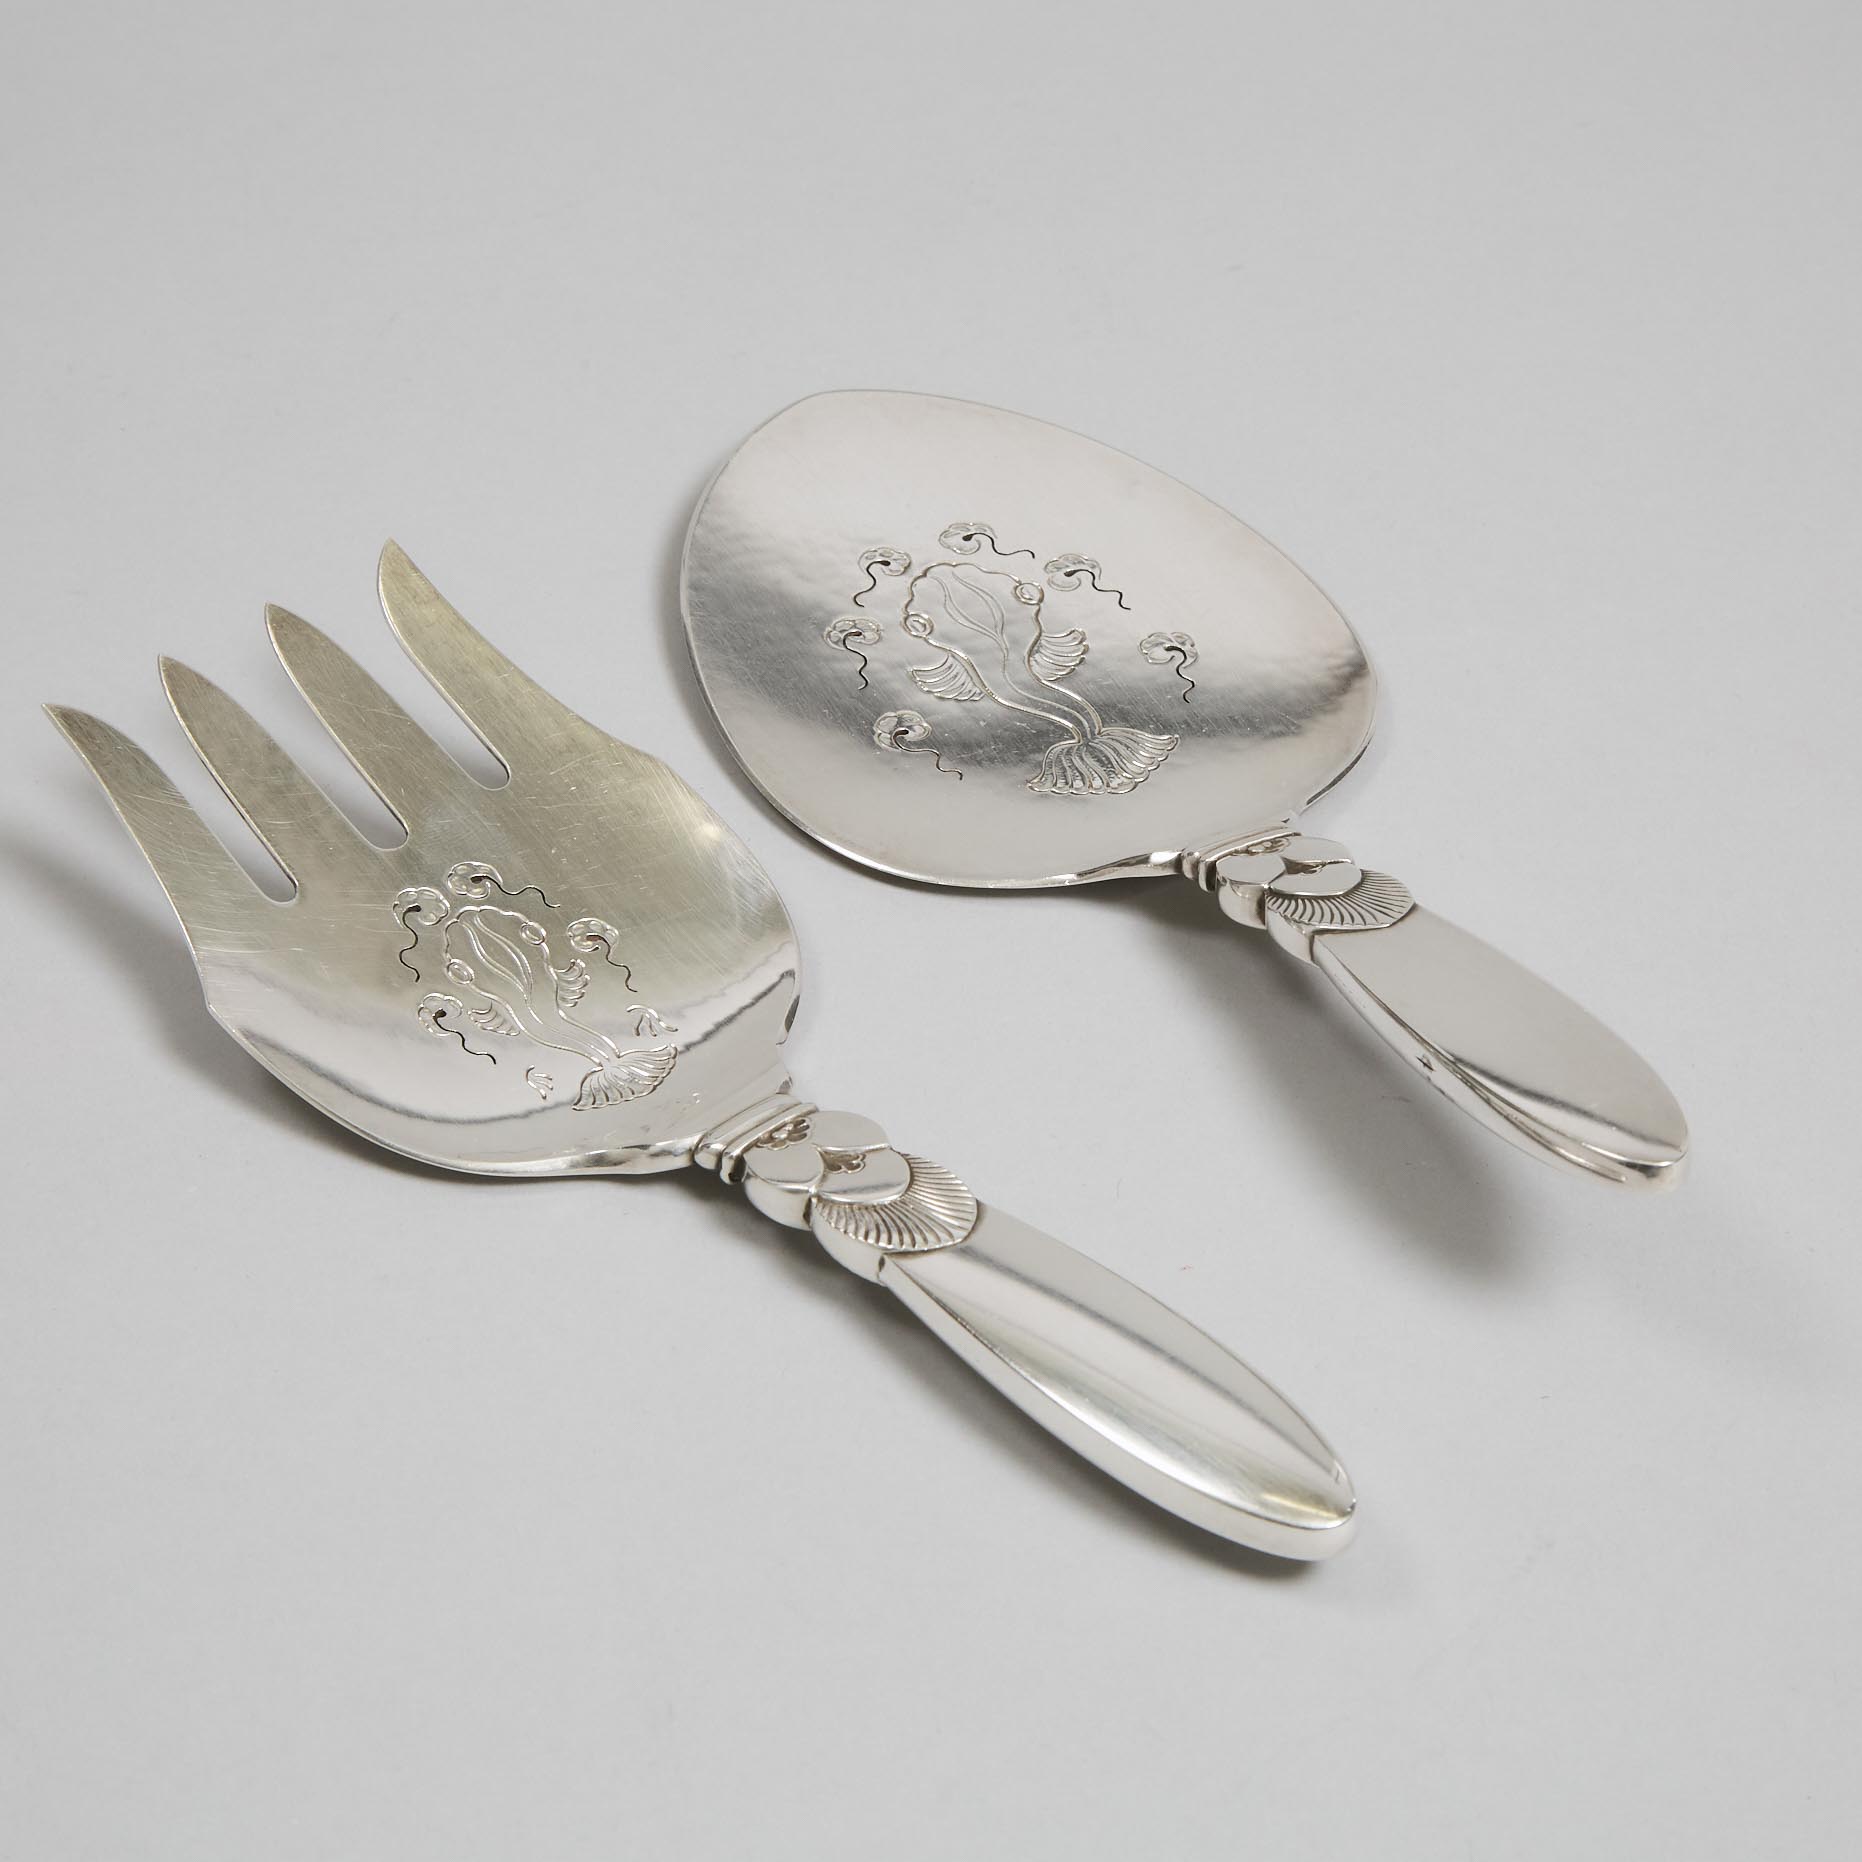 Pair of Danish Silver ‘Cactus’ Pattern Fish Servers, Gundorph Albertus for Georg Jensen, Copenhagen, c.1933-44